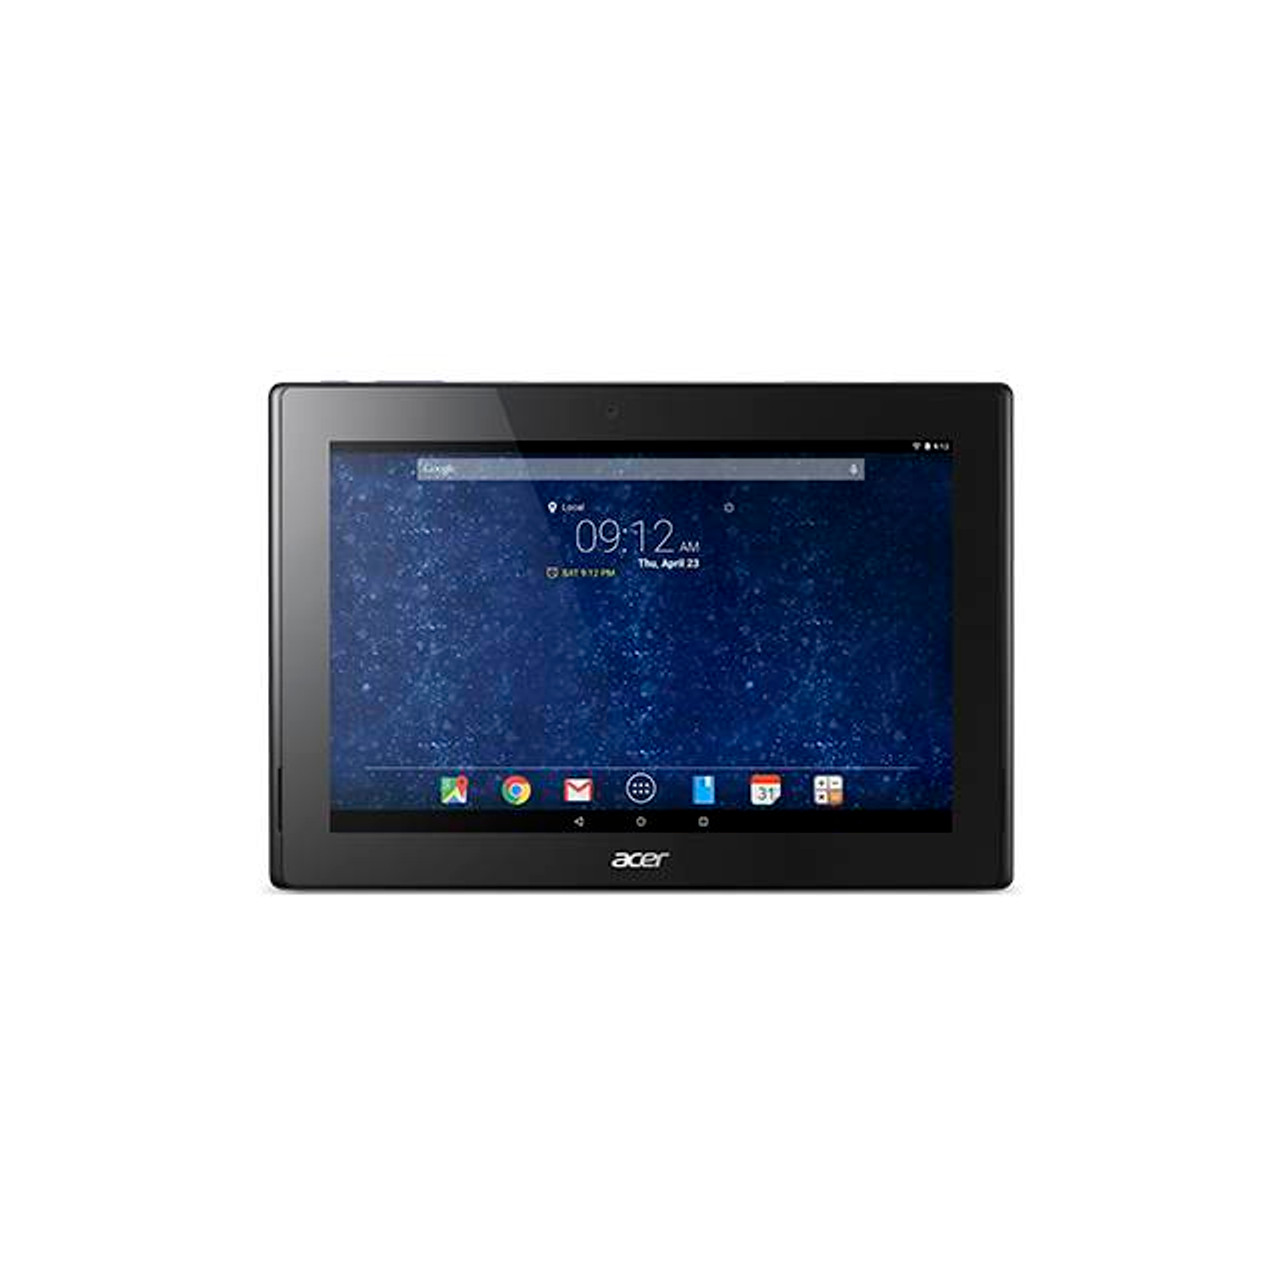 Acer Iconia Tab 10 A3-A30-18P1 10.1 inch Intel Atom Z3735F 1.3GHz/ 2GB DDR3L/ 16GB eMMC/ Android 5.0 Tablet (Blue)